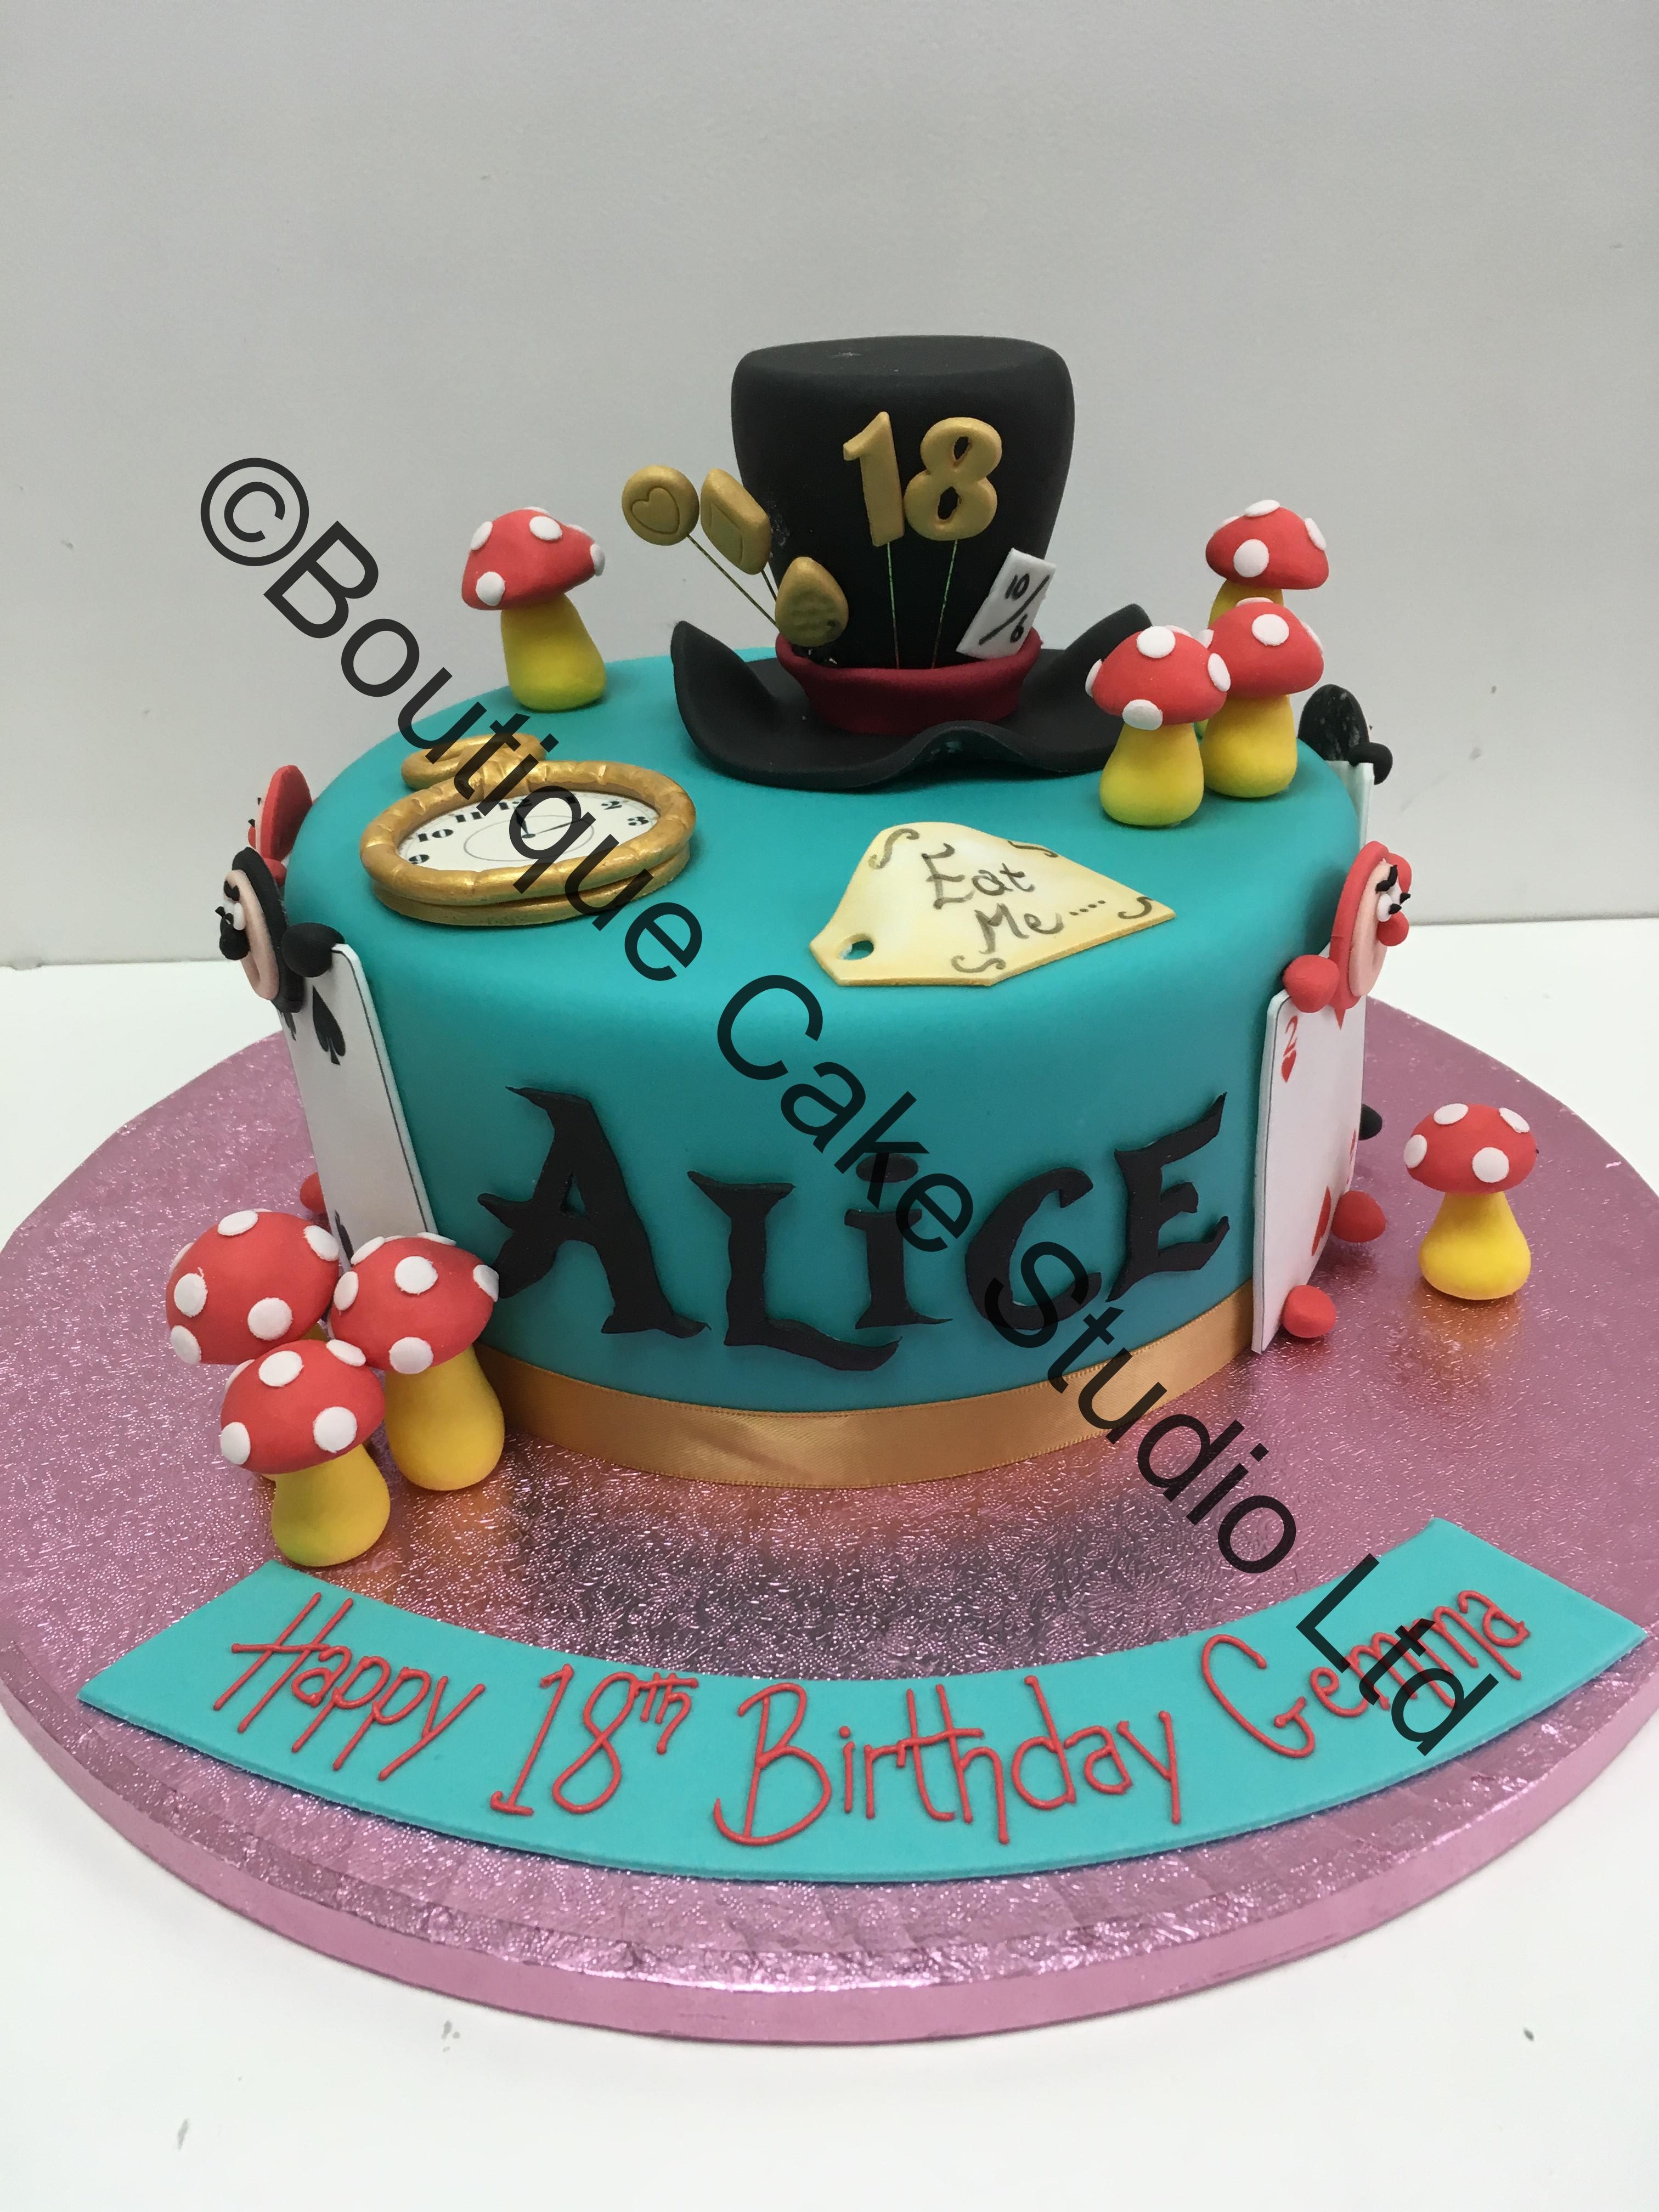 Alice in Wonderland themed Cake